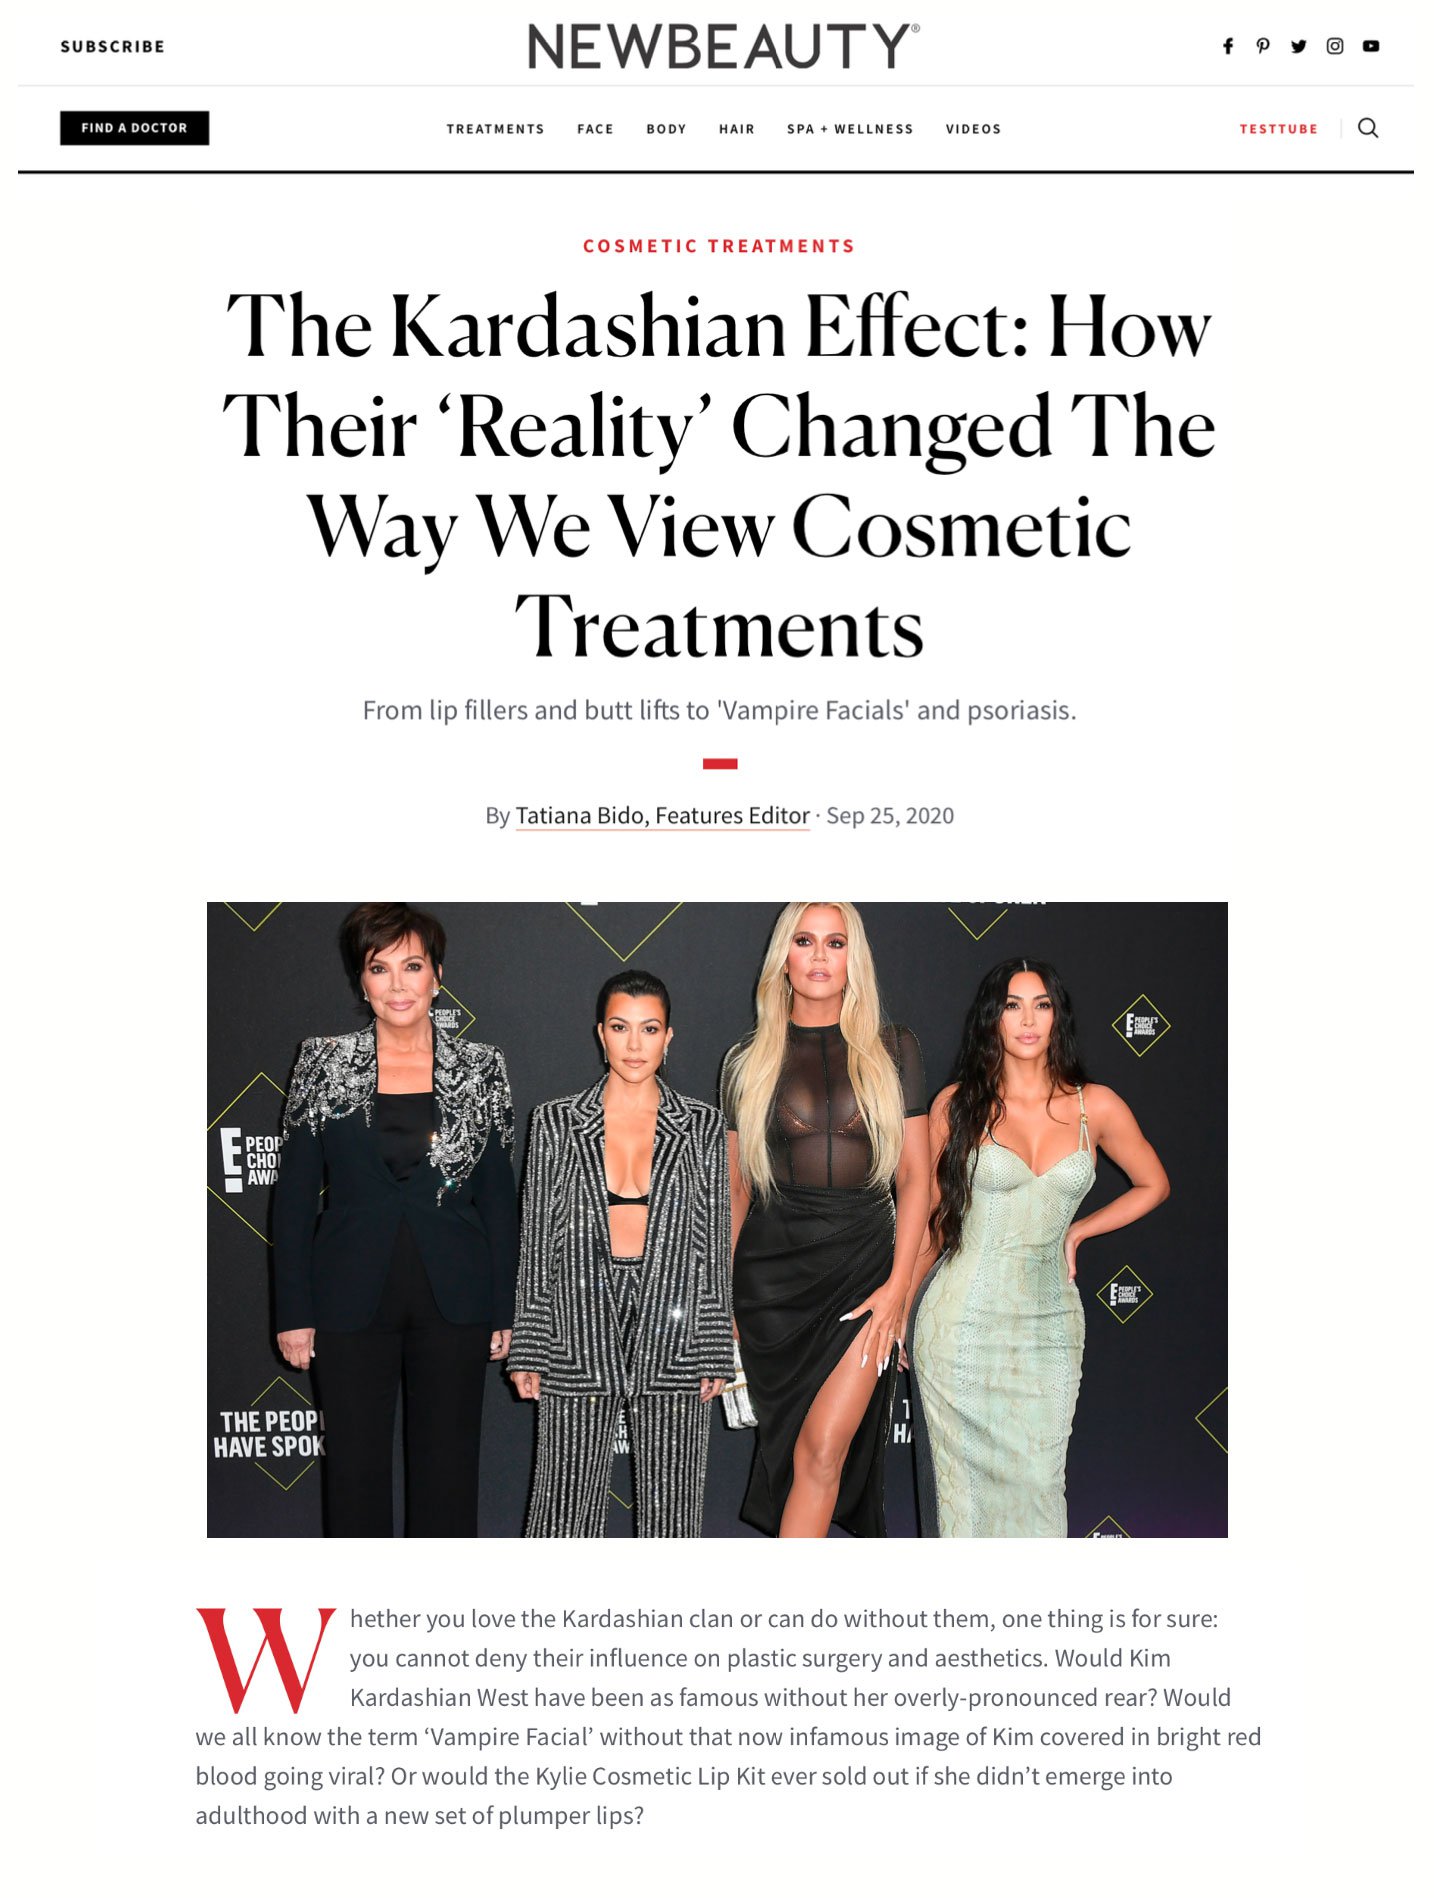 New Beauty Kardashian Effect Article